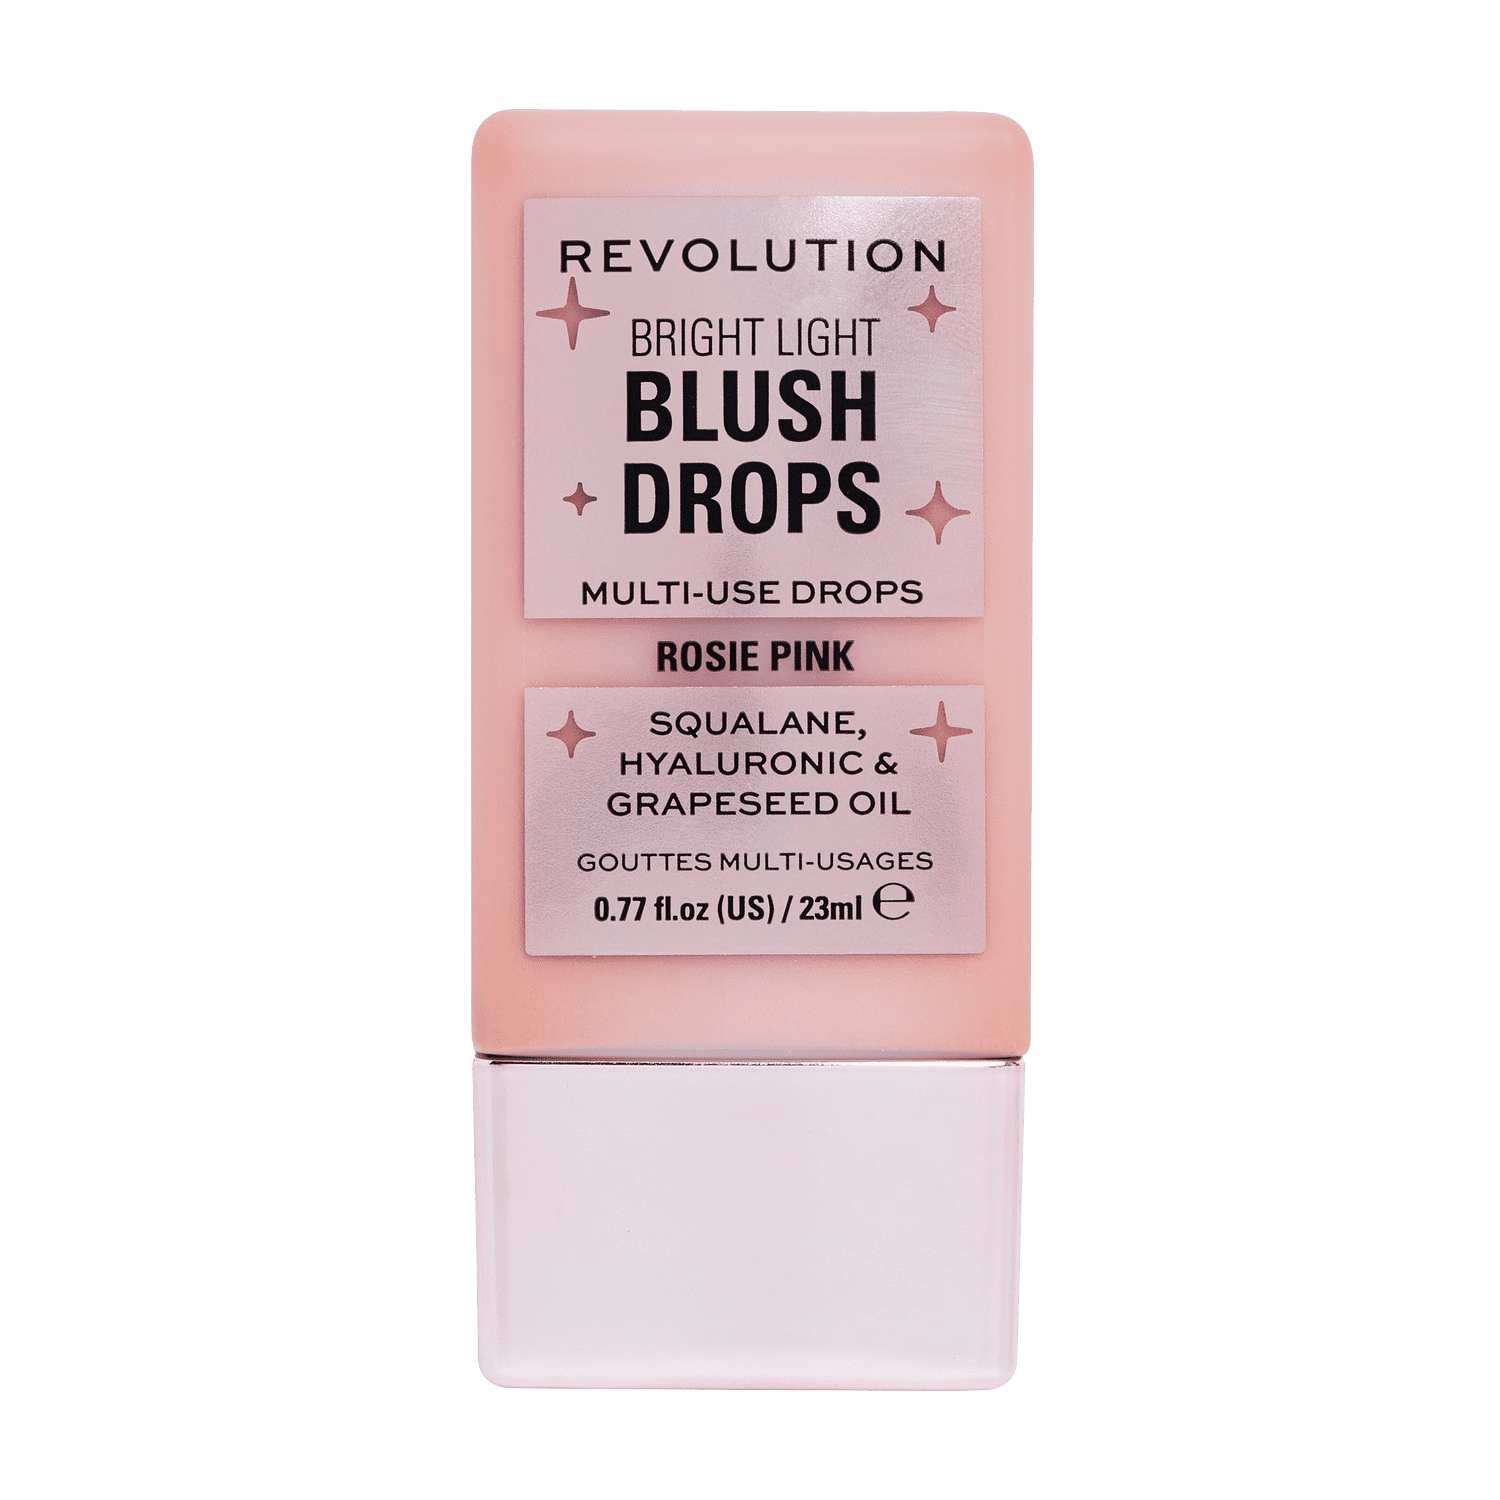 Revolution Bright Light Blush Drops Pink Rosie 23 ml